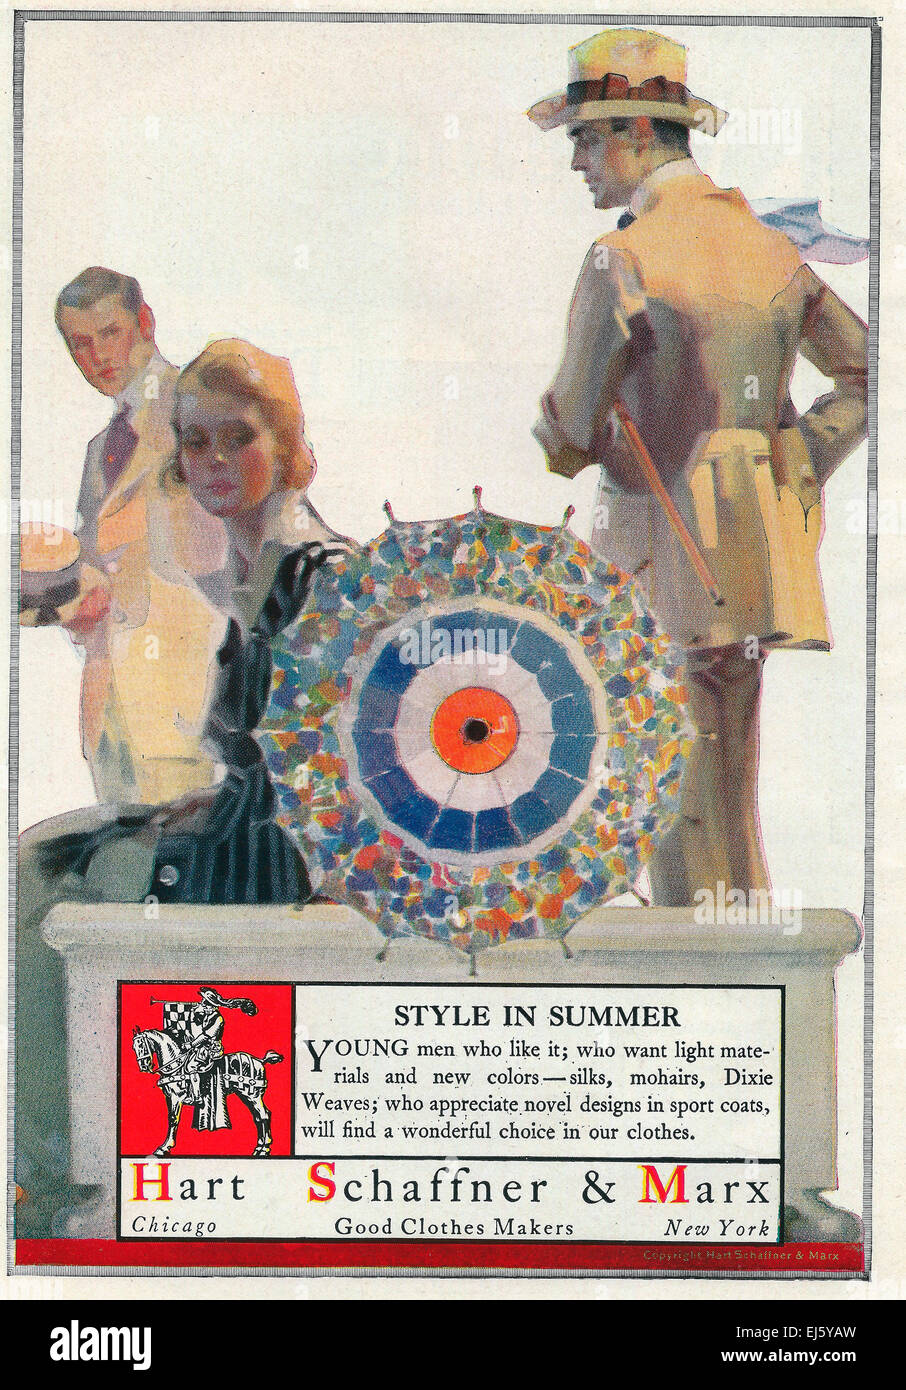 Hart, Schaffner & Marx - Good Clothes Makers - 1916 Advertisement Stock Photo